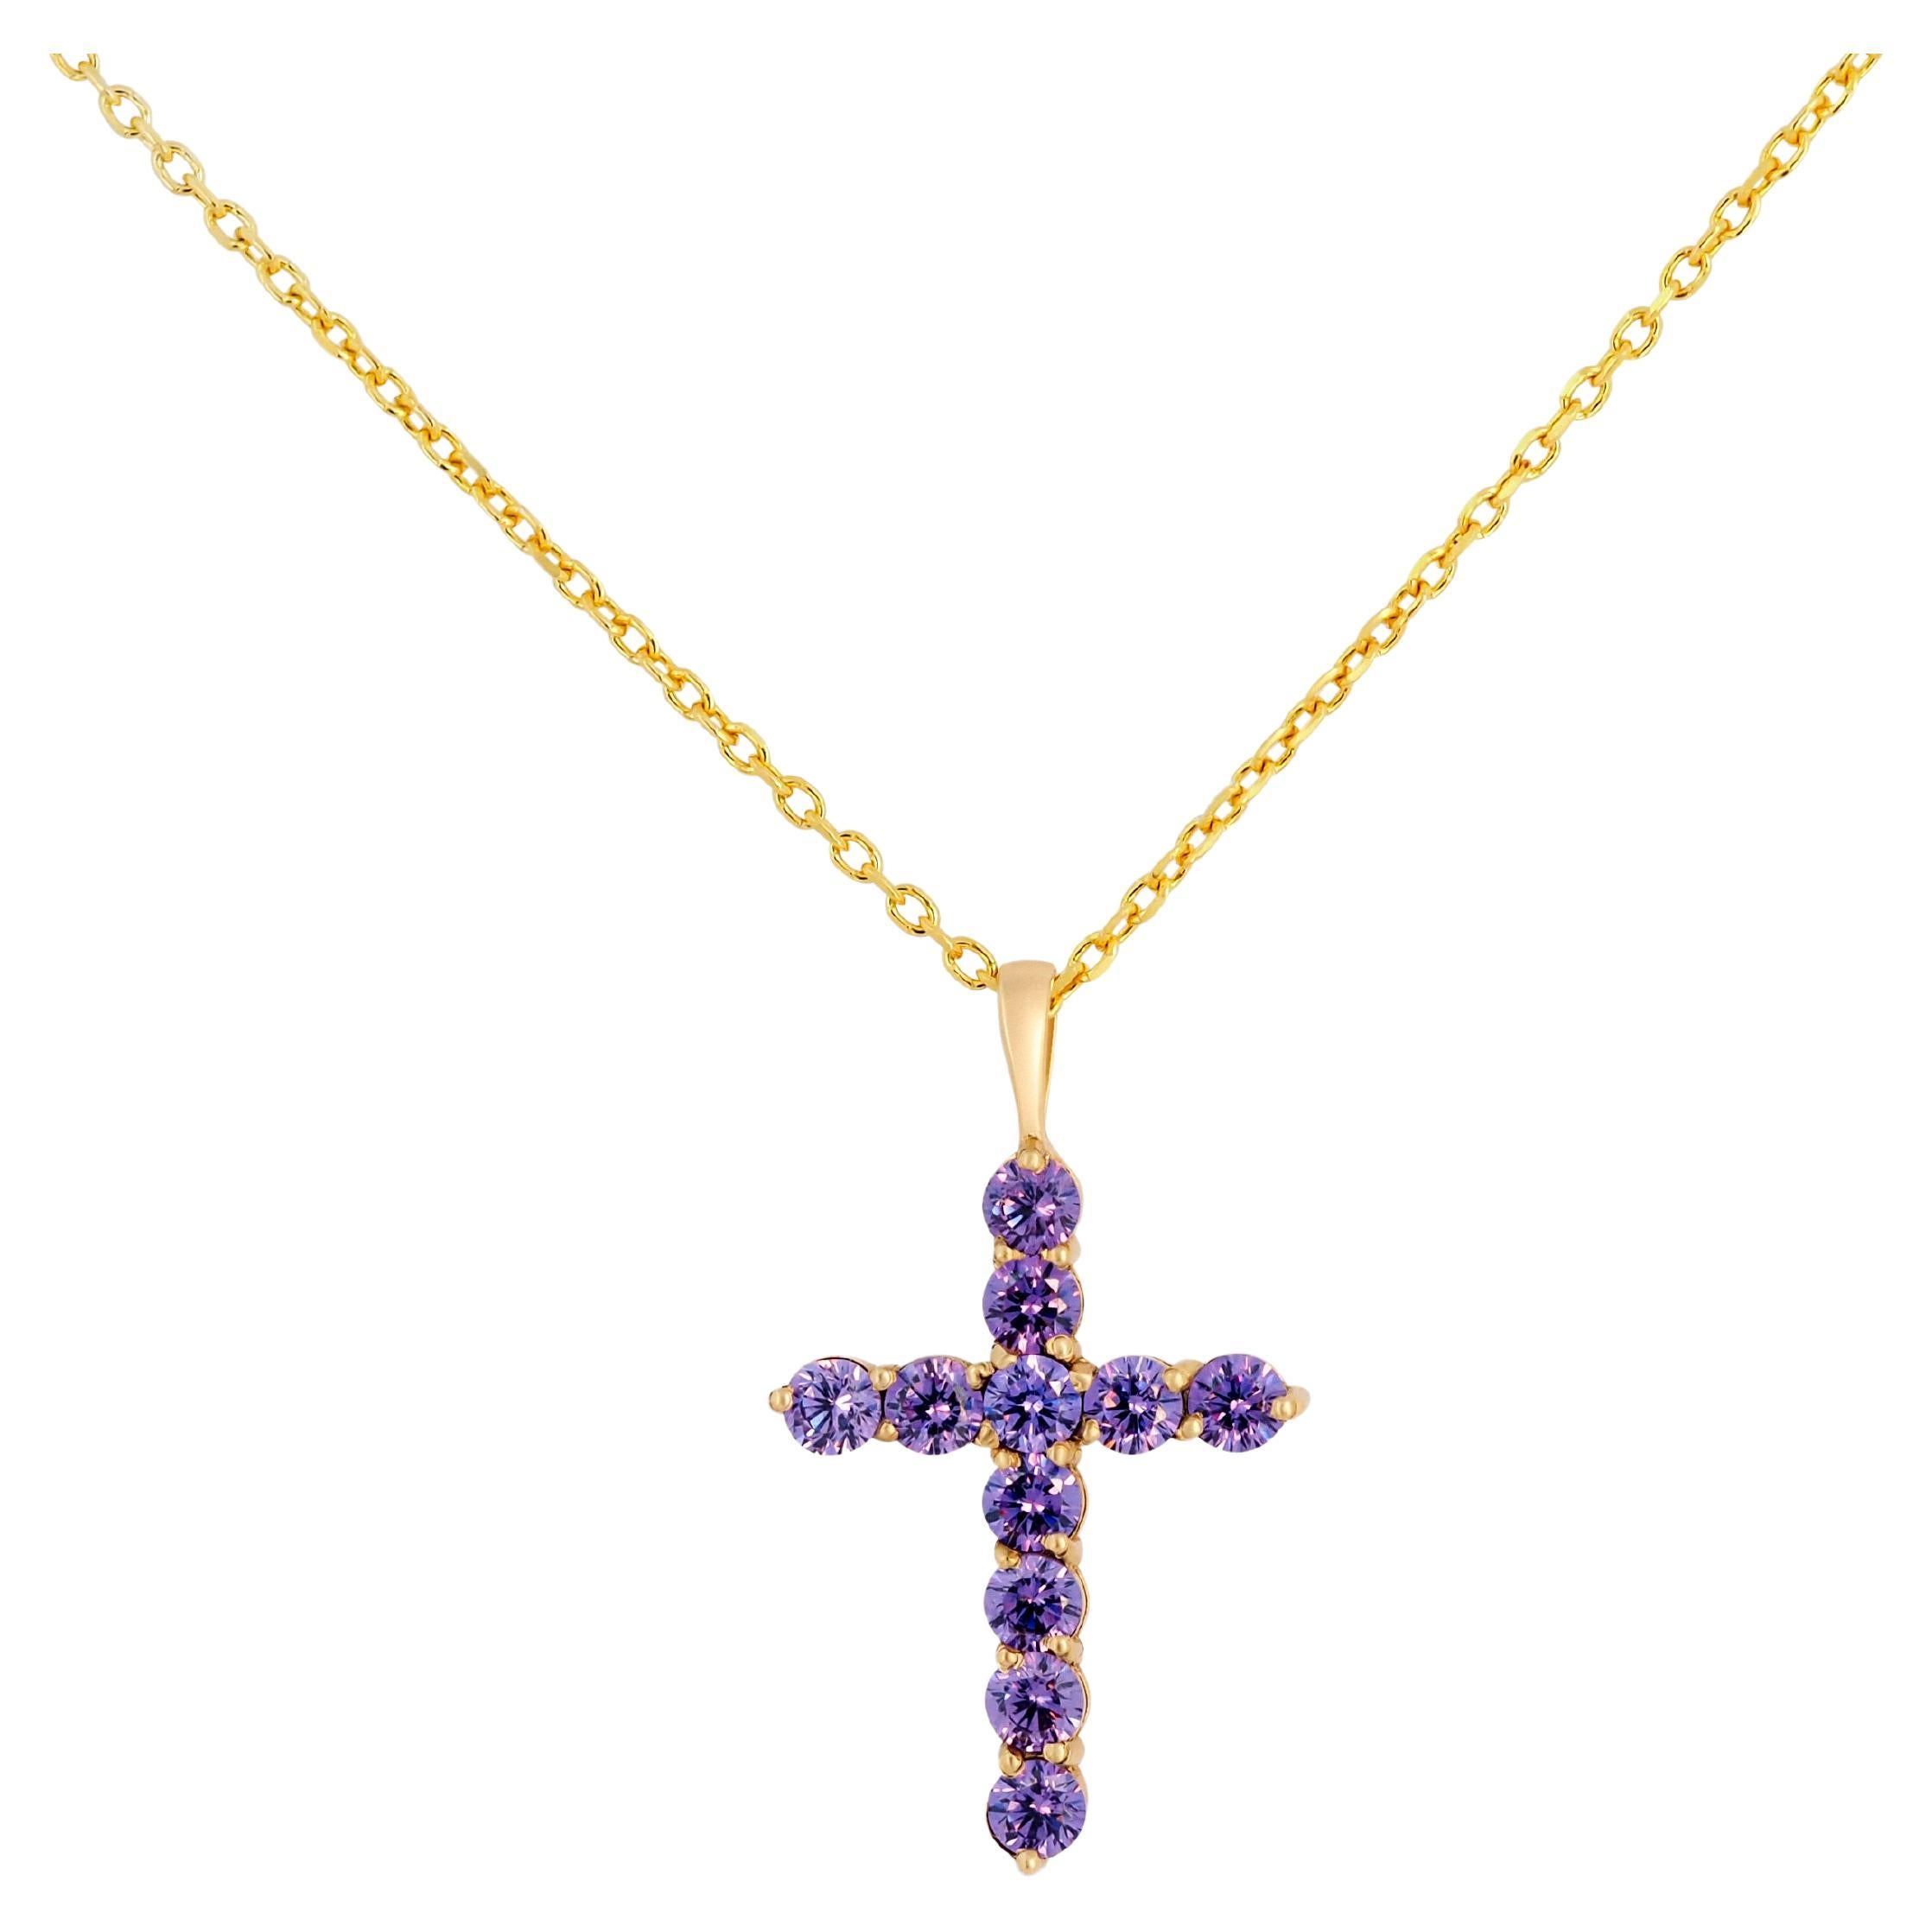 Lavender gemstone 14k gold cross pendant